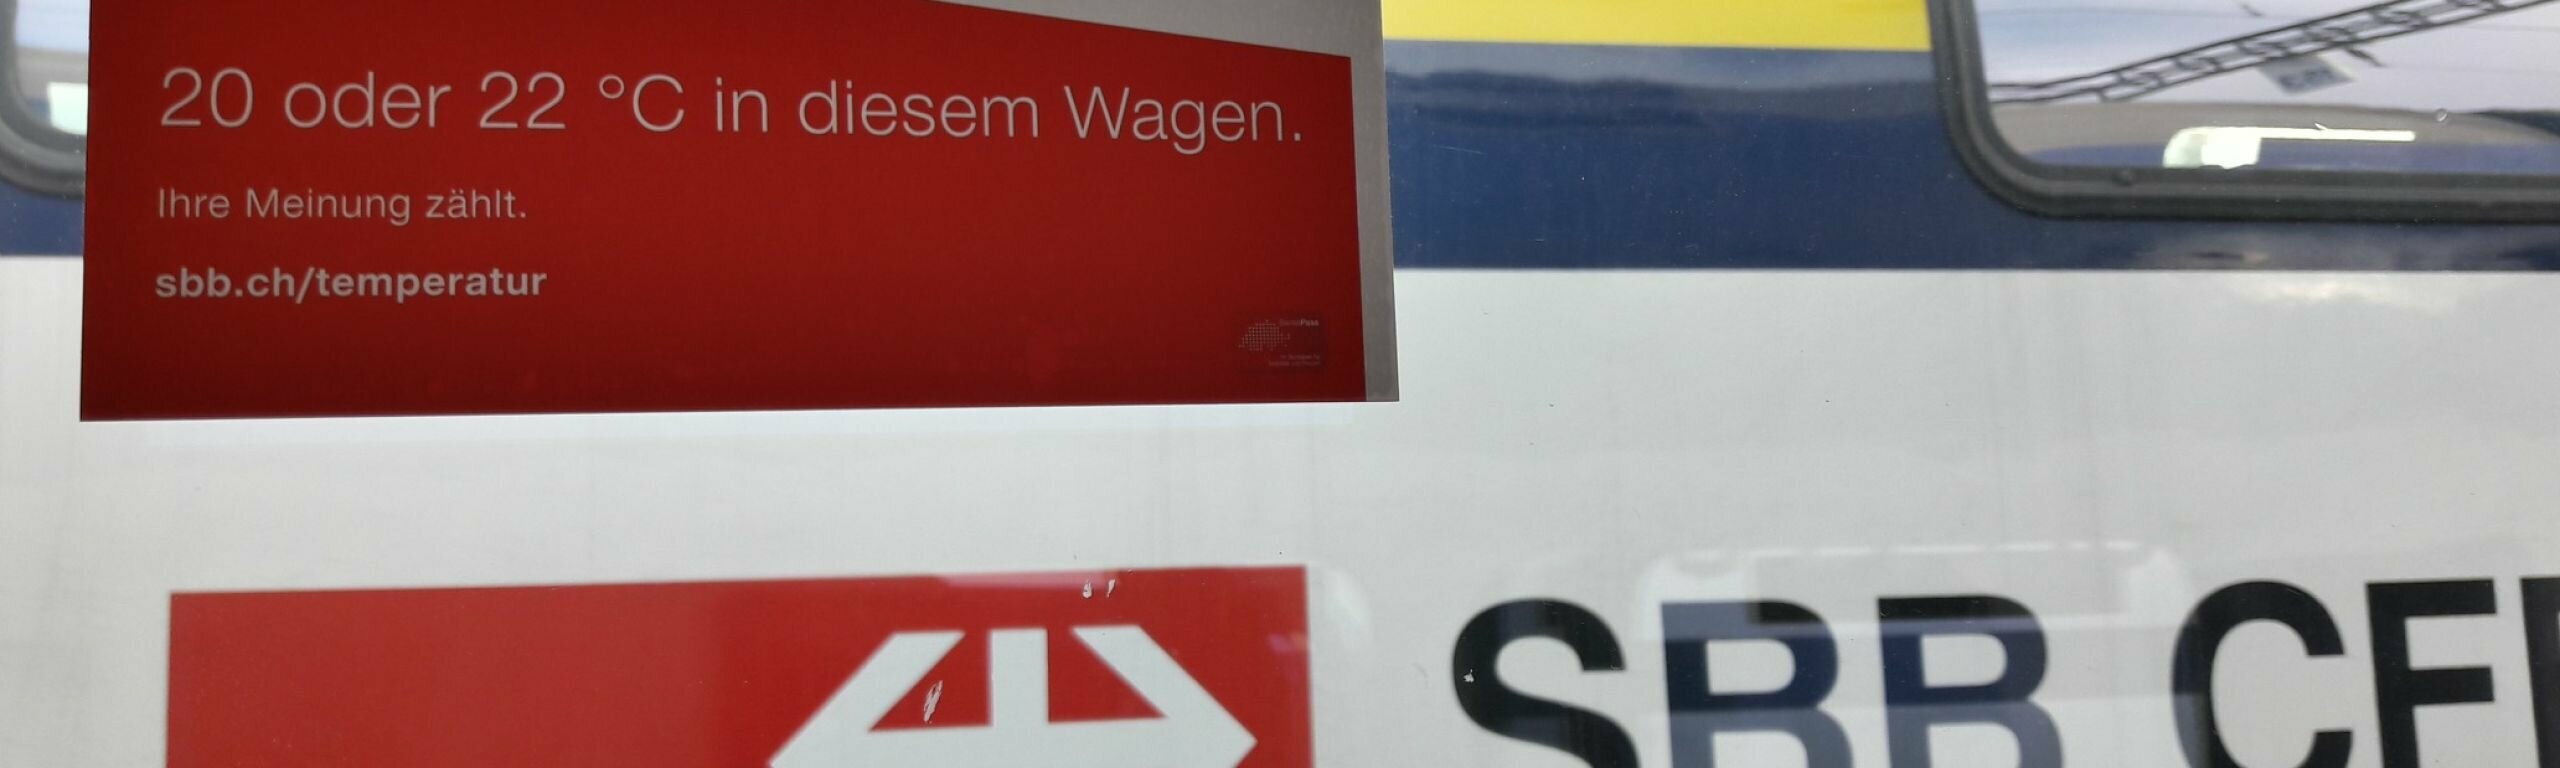 Energiesparen dank 20 statt 22 Grad in der S-Bahn Zürich